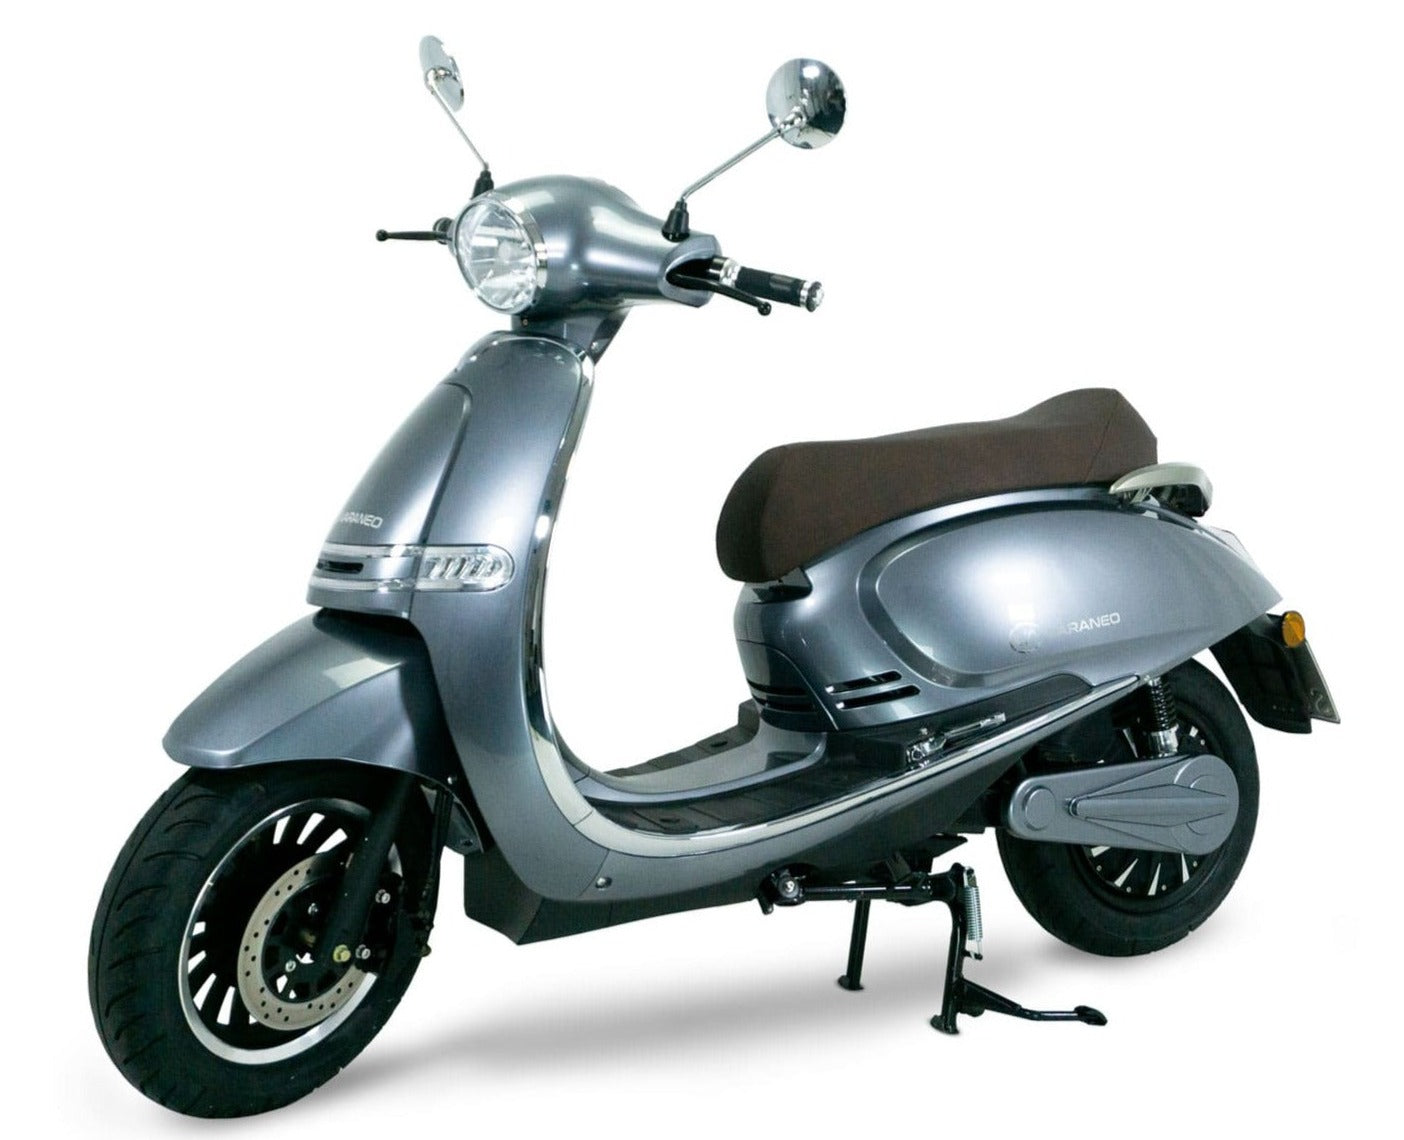 Varaneo C4 E-Scooter/e-mobility.vip